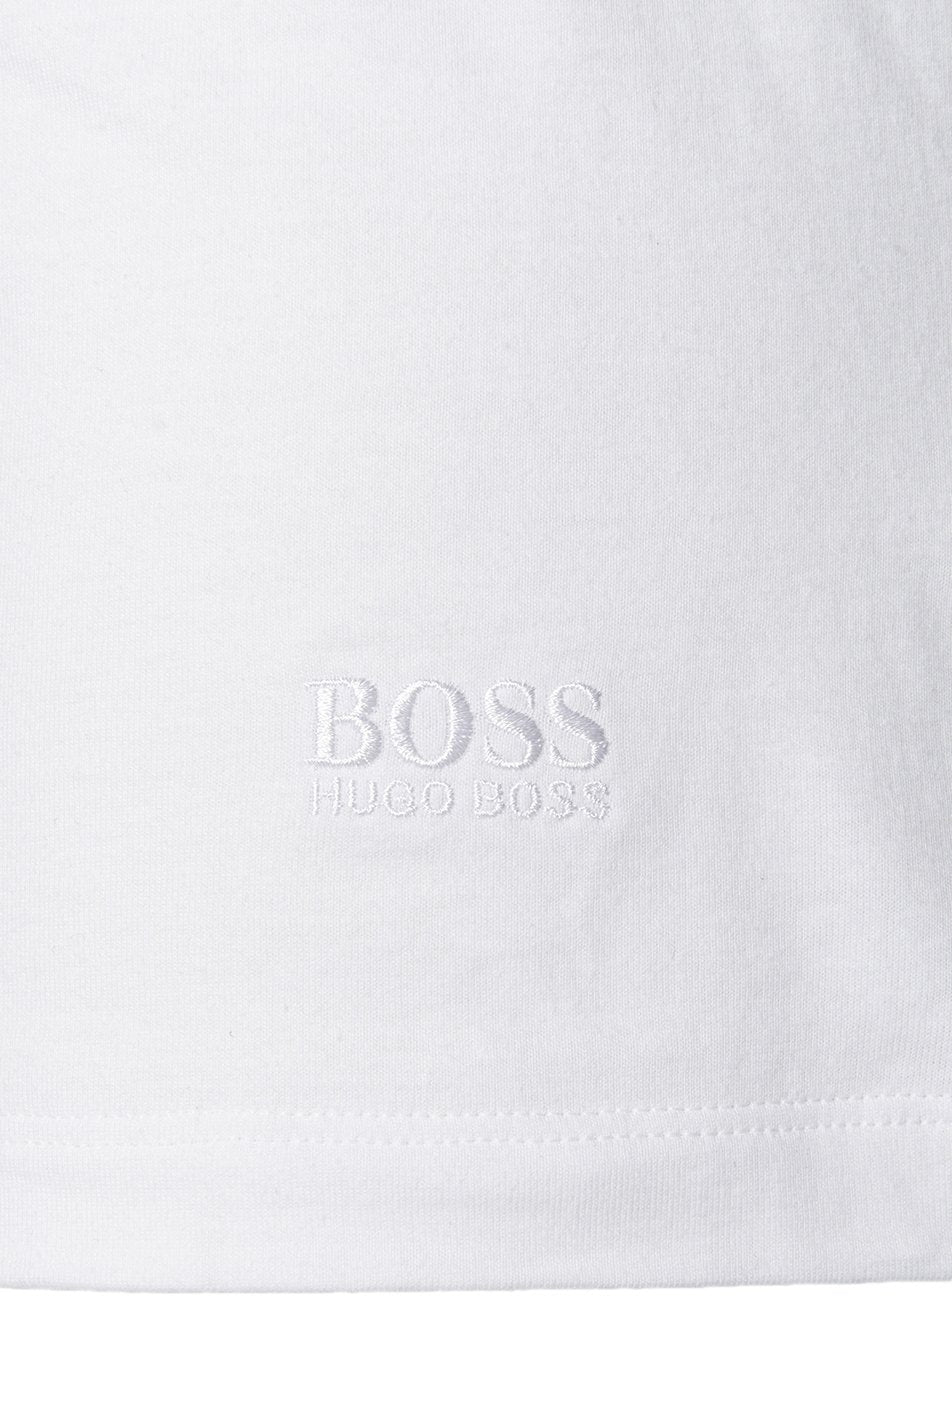 BOSS Men's 3 Pack Tank Top Vest